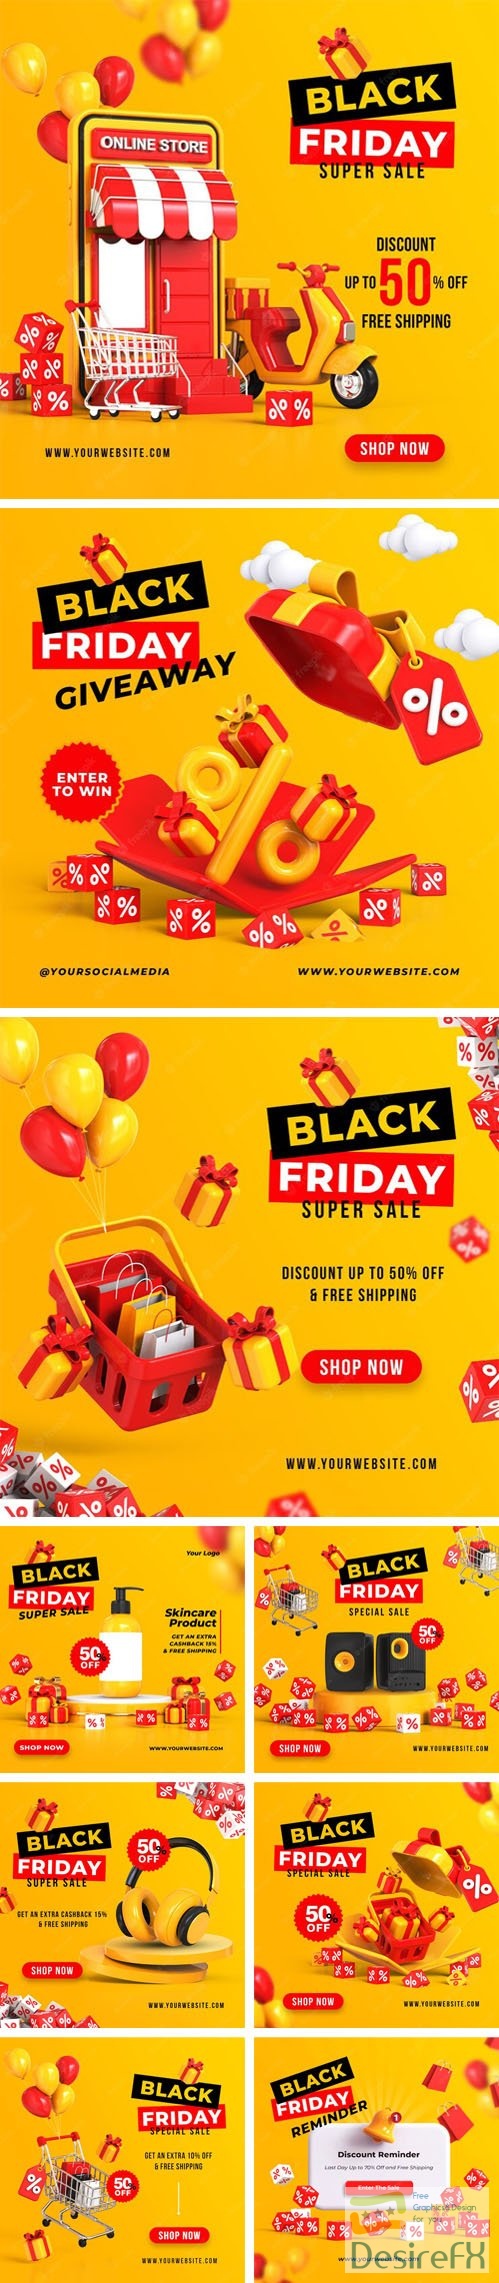 Black Friday Super Sale Social Media Posts PSD Templates Pack